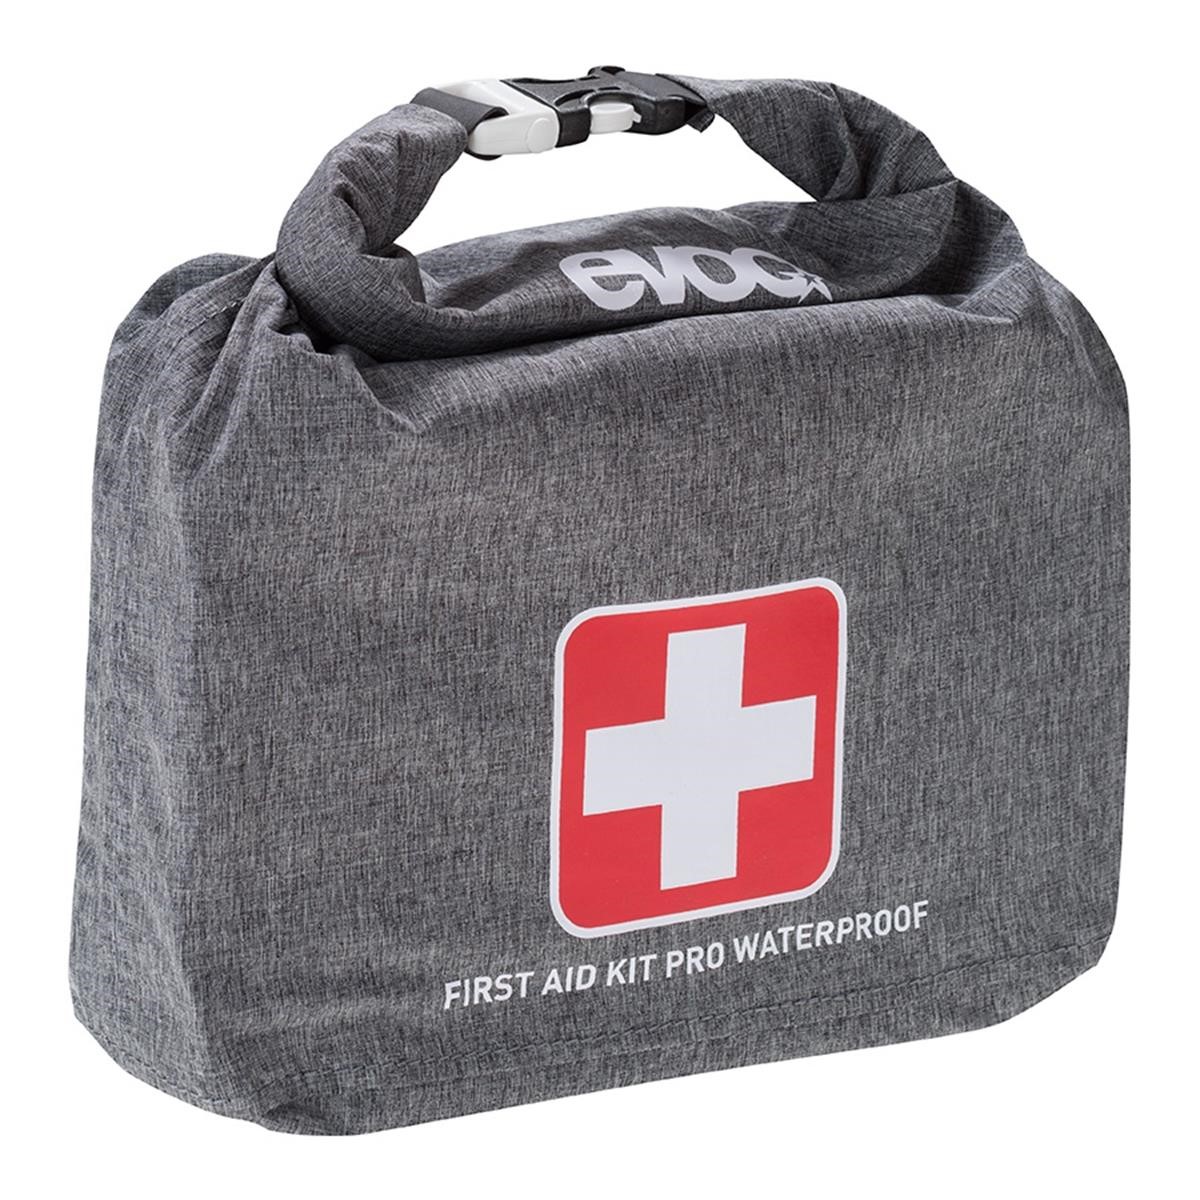 Evoc Gear Bag First Aid Kit Pro Waterproof Black/Heather Grey, 3 Liter